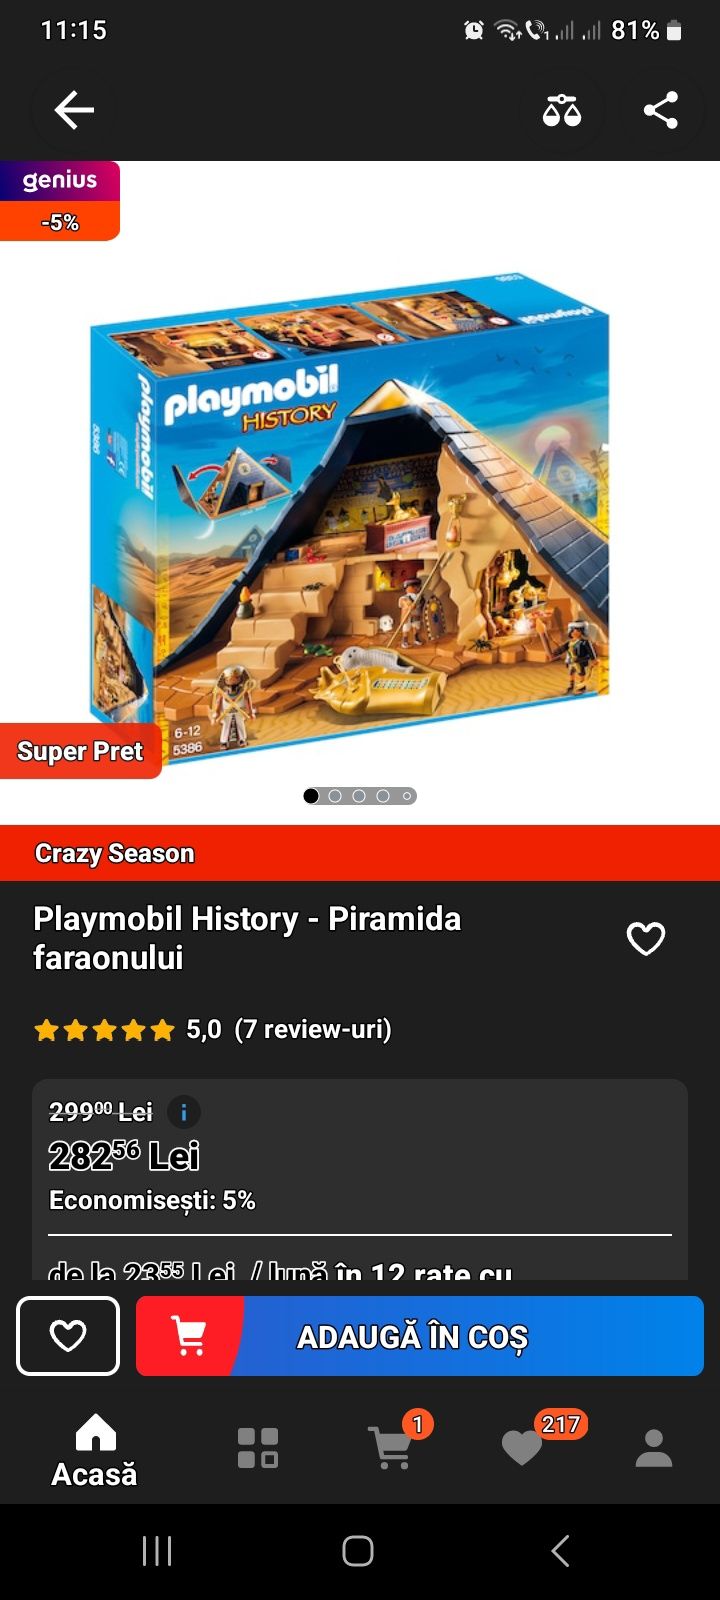 Piramida faraonului Playmobil History